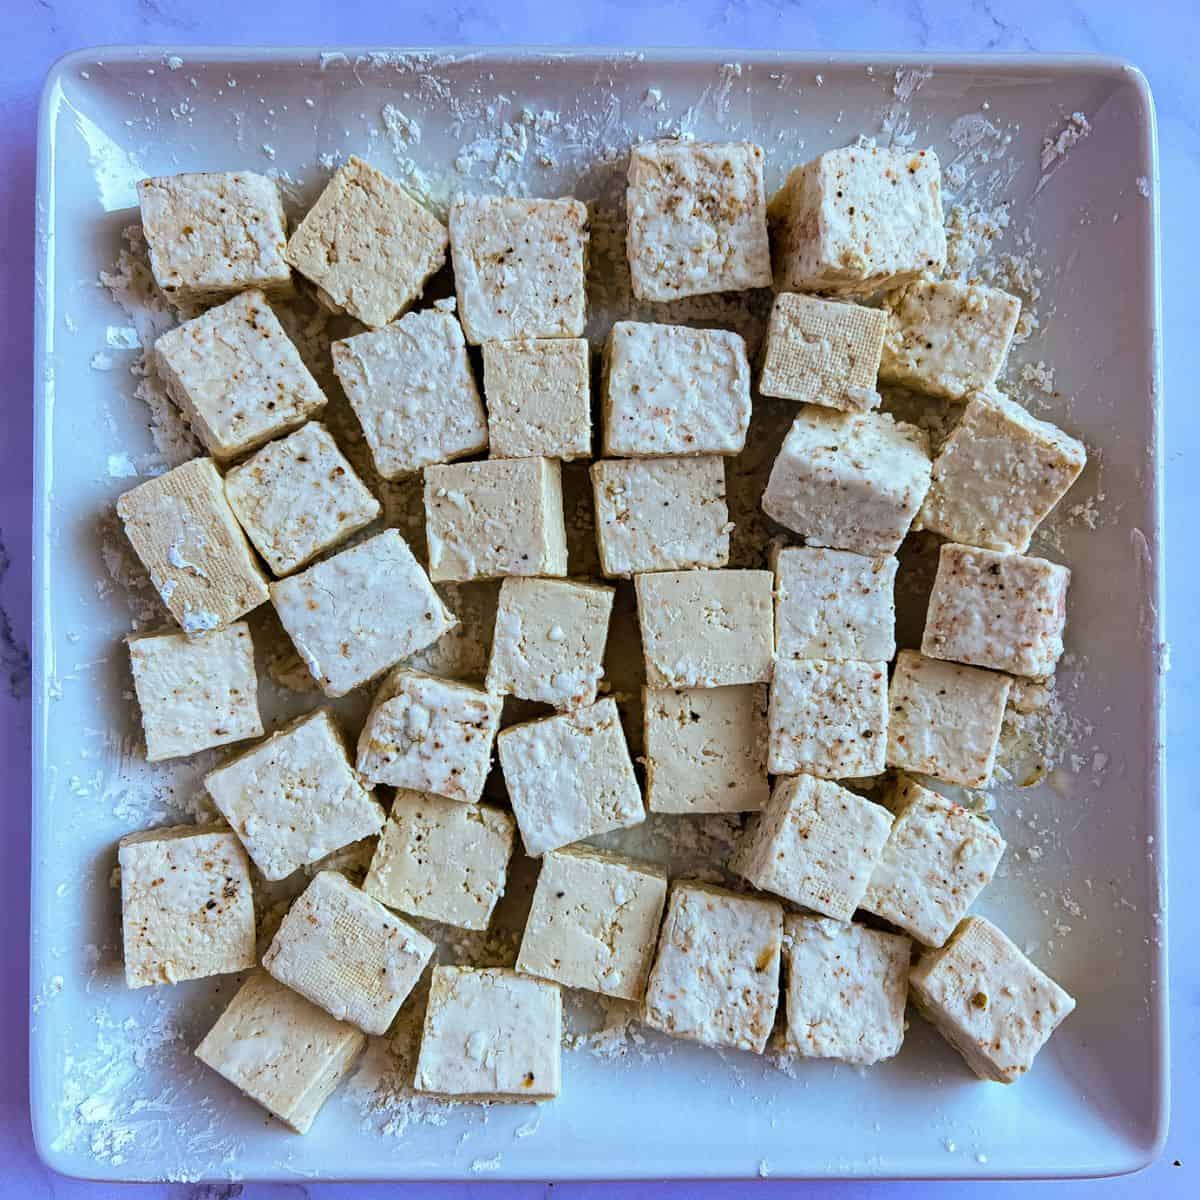 Tofu cubes coated in cornstarch mixture.